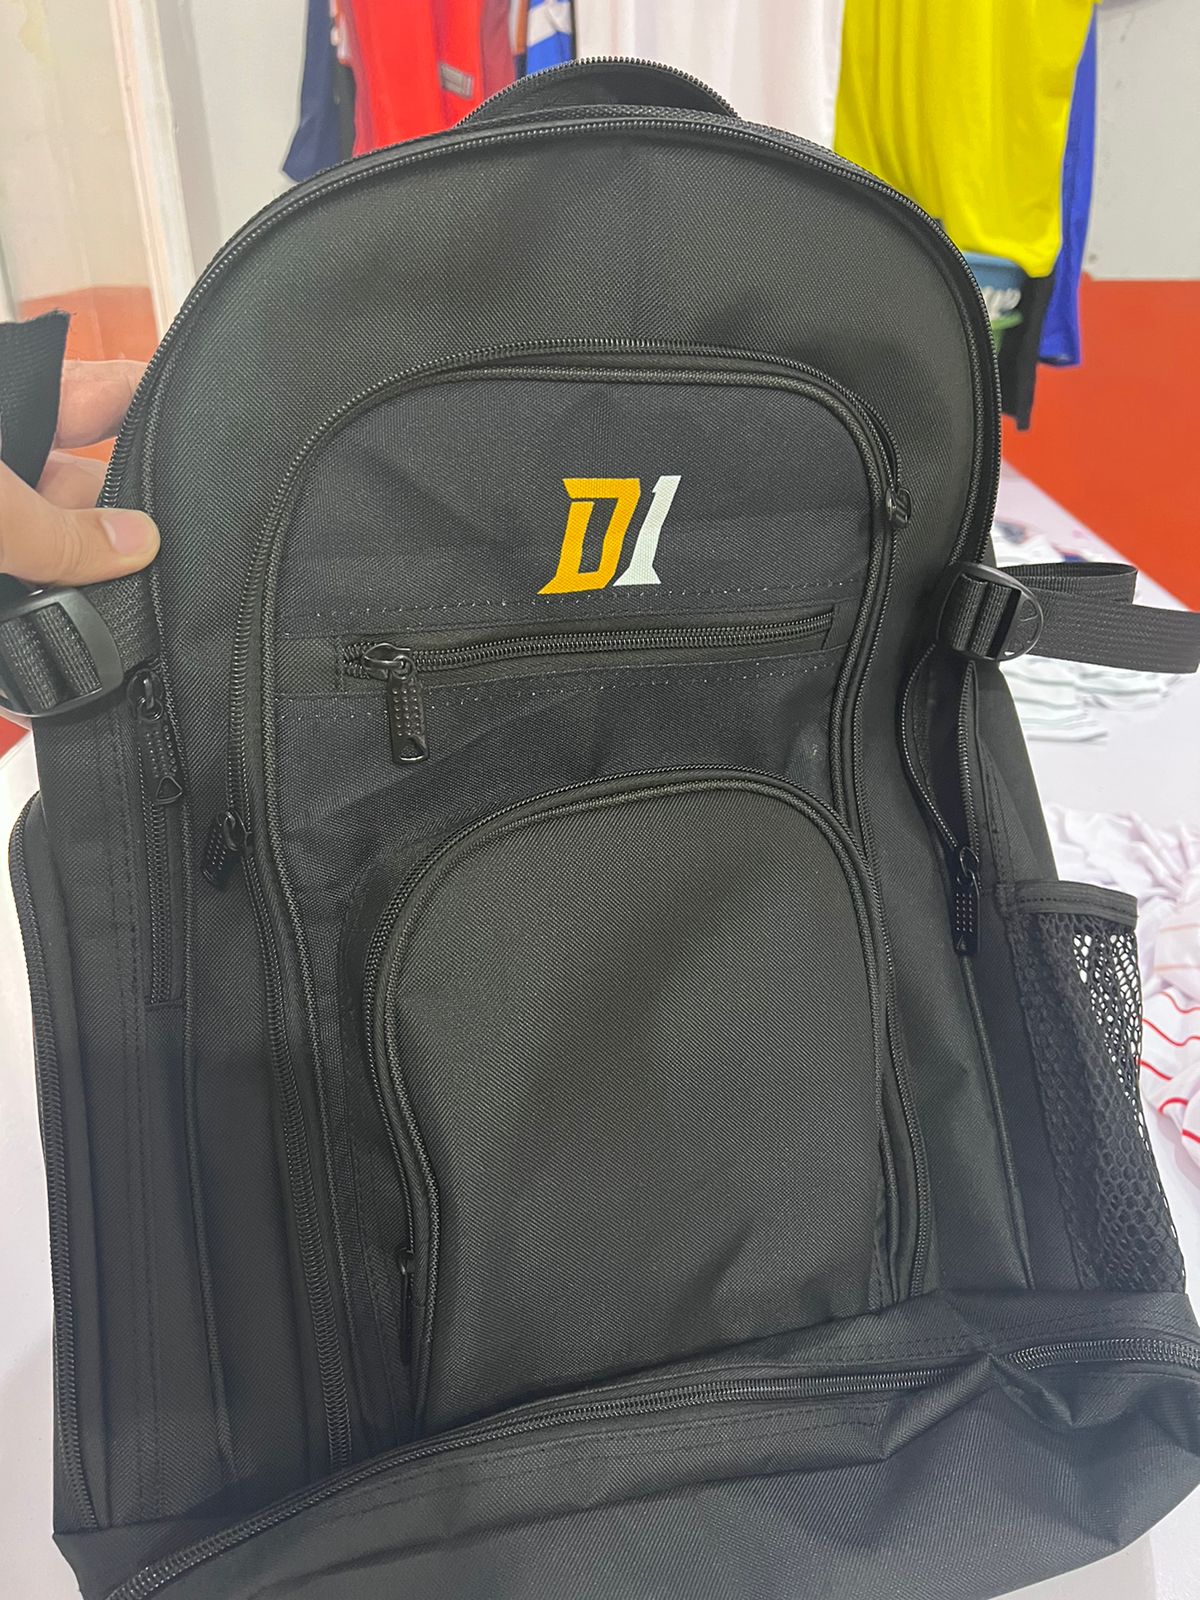 D1 Elite Personalized School Backpack